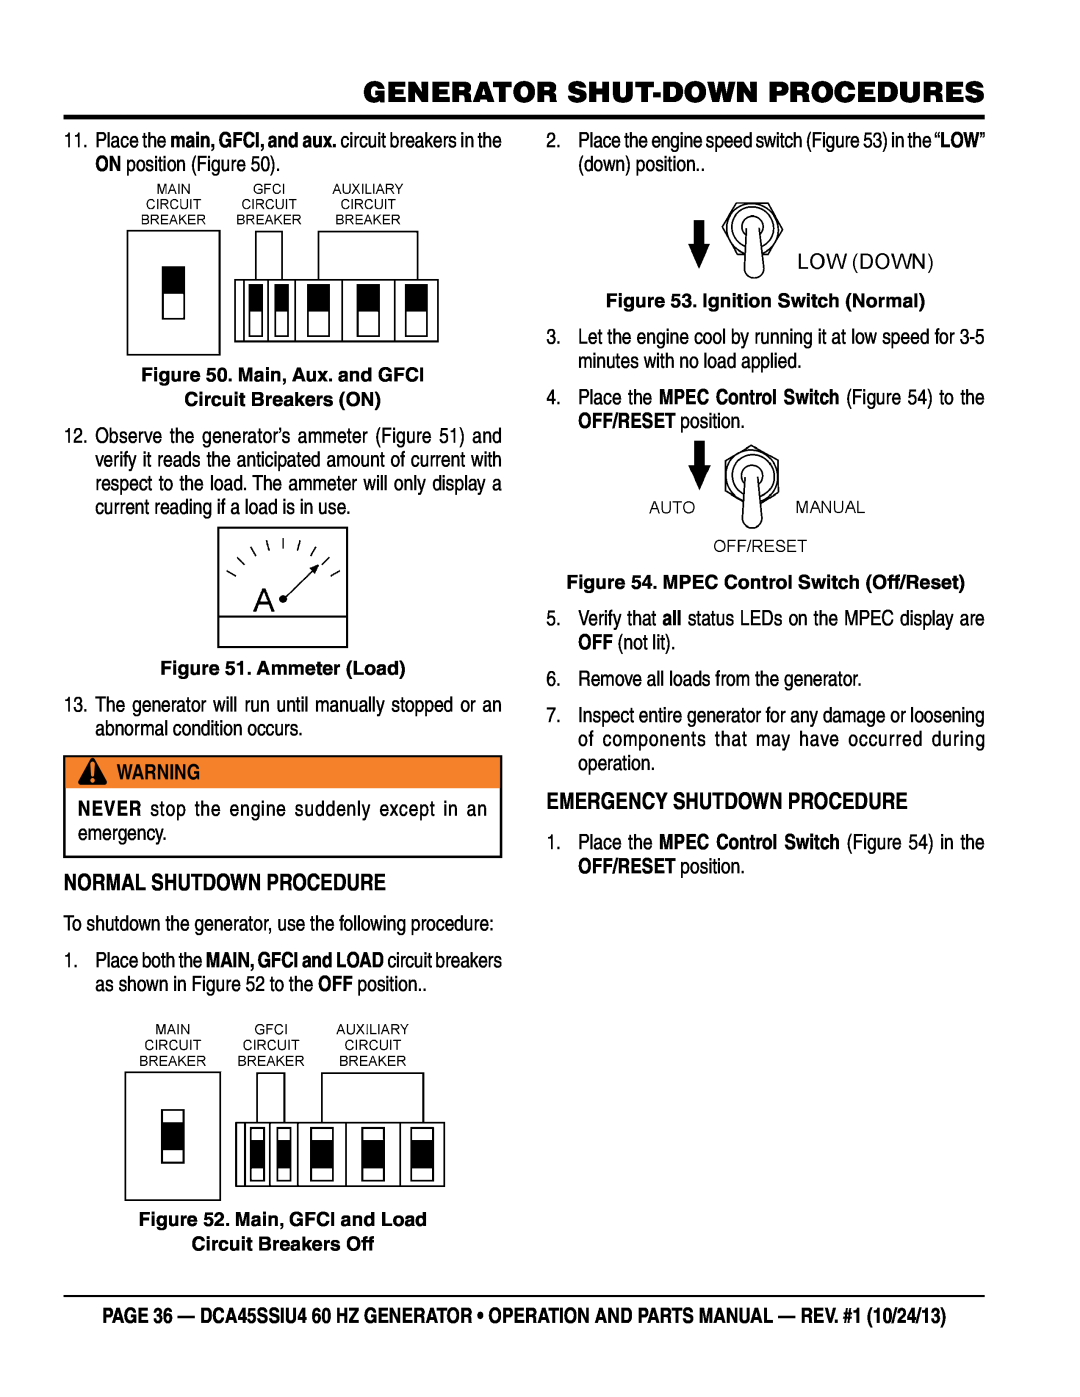 Multiquip dca45ssiu4 manual Generator Shut-Down Procedures, Normal Shutdown Procedure, Emergency Shutdown Procedure 